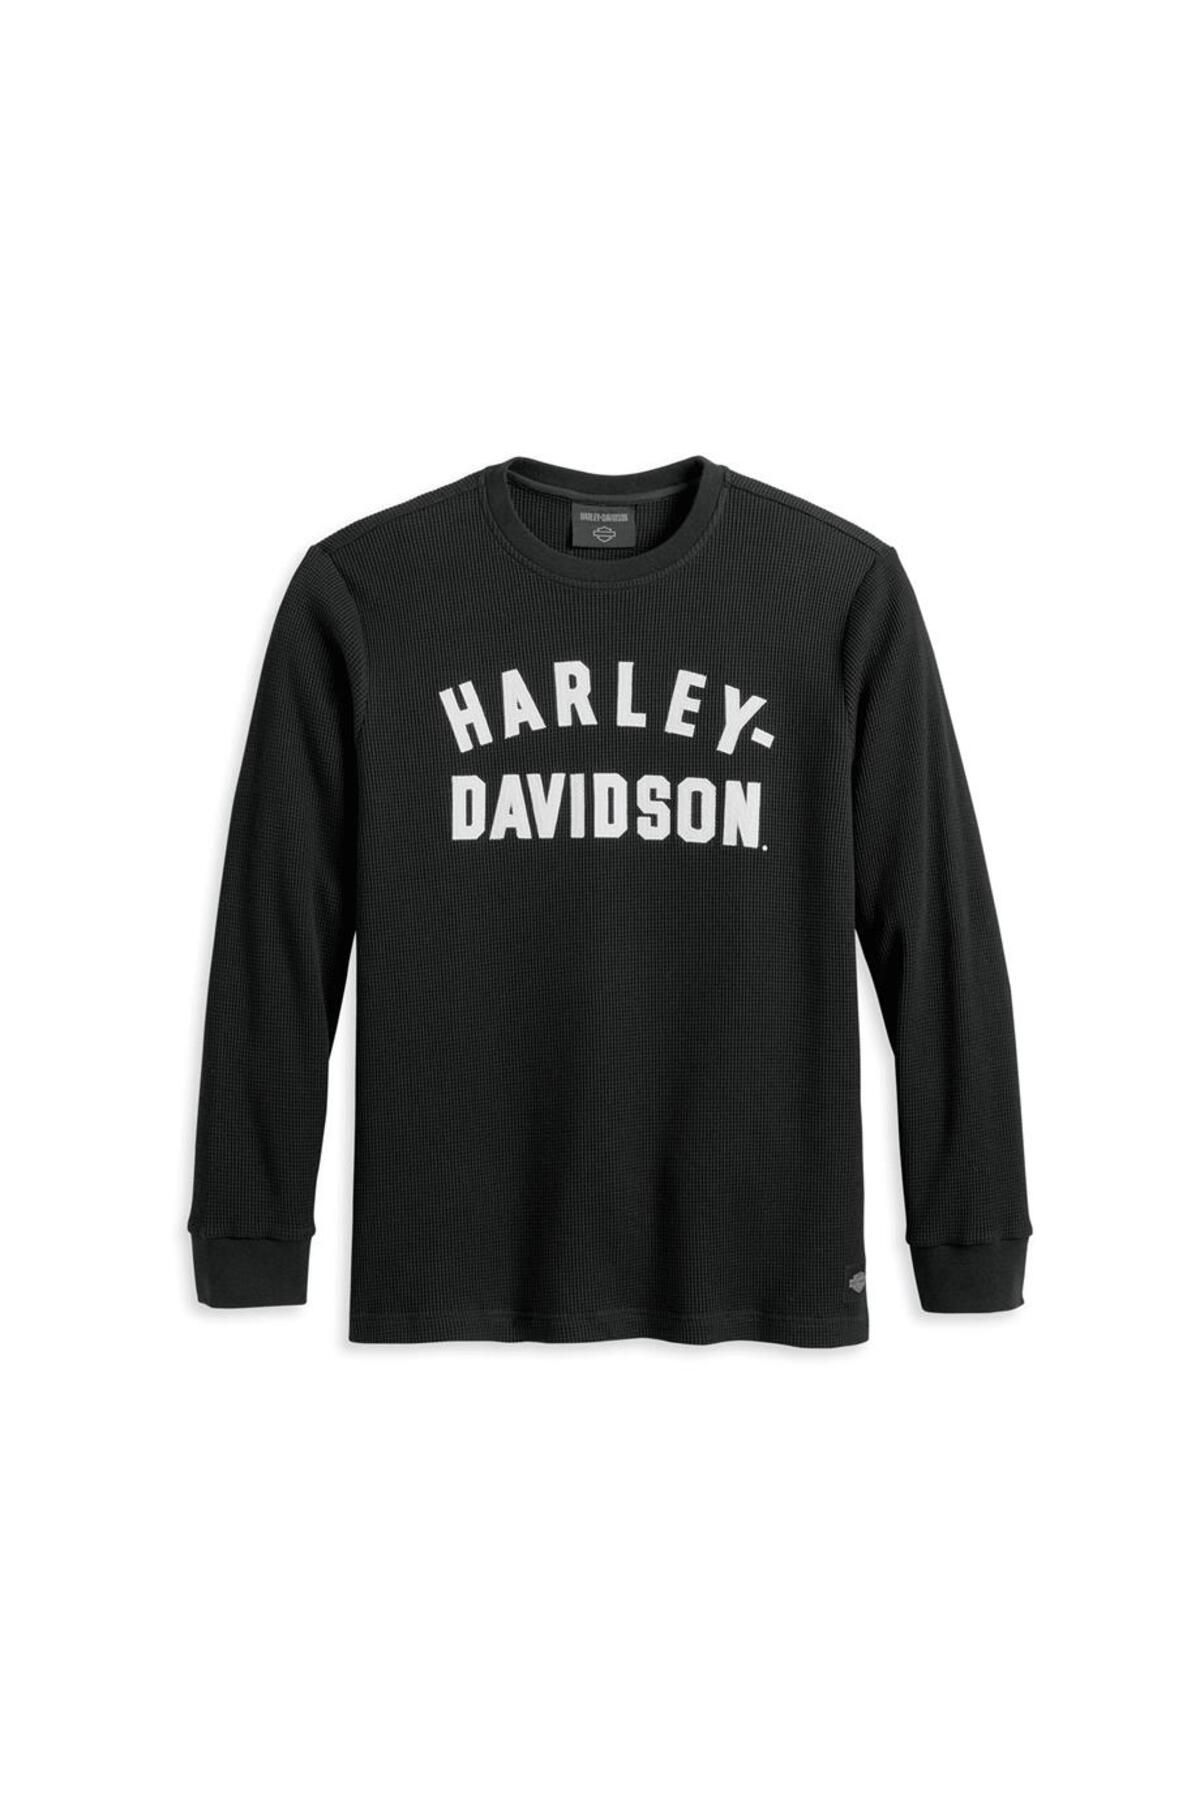 Harley Davidson Harley-davidson Men's Staple Thermal - Black Beauty